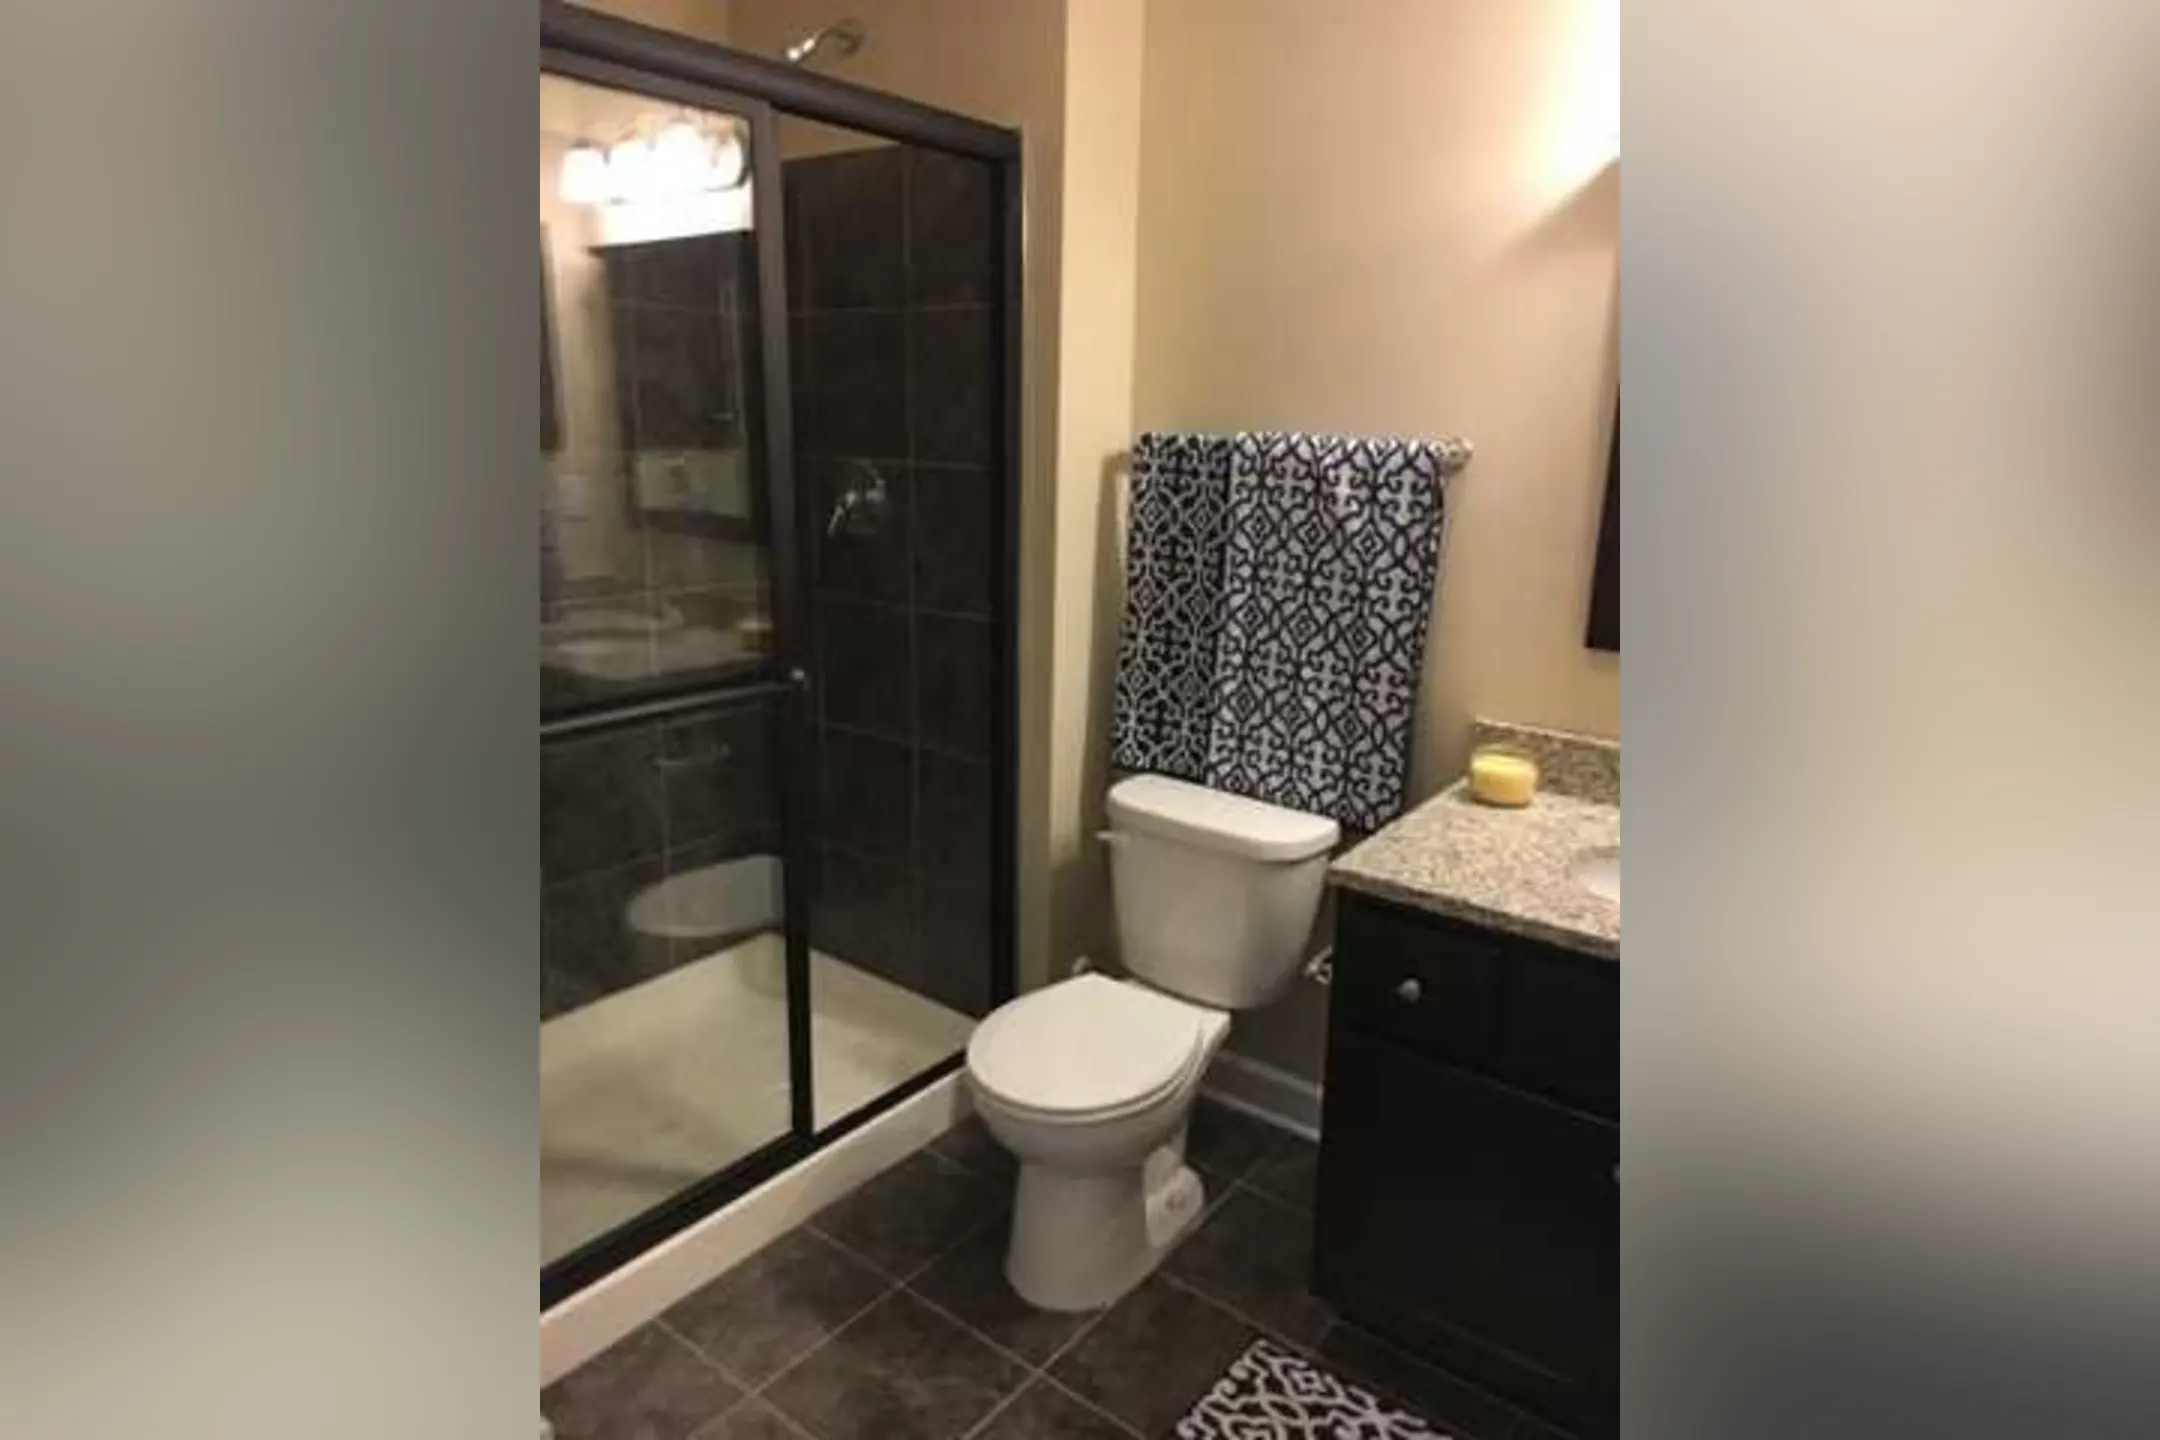 Bathroom - The Villas of Madison - Madison, OH